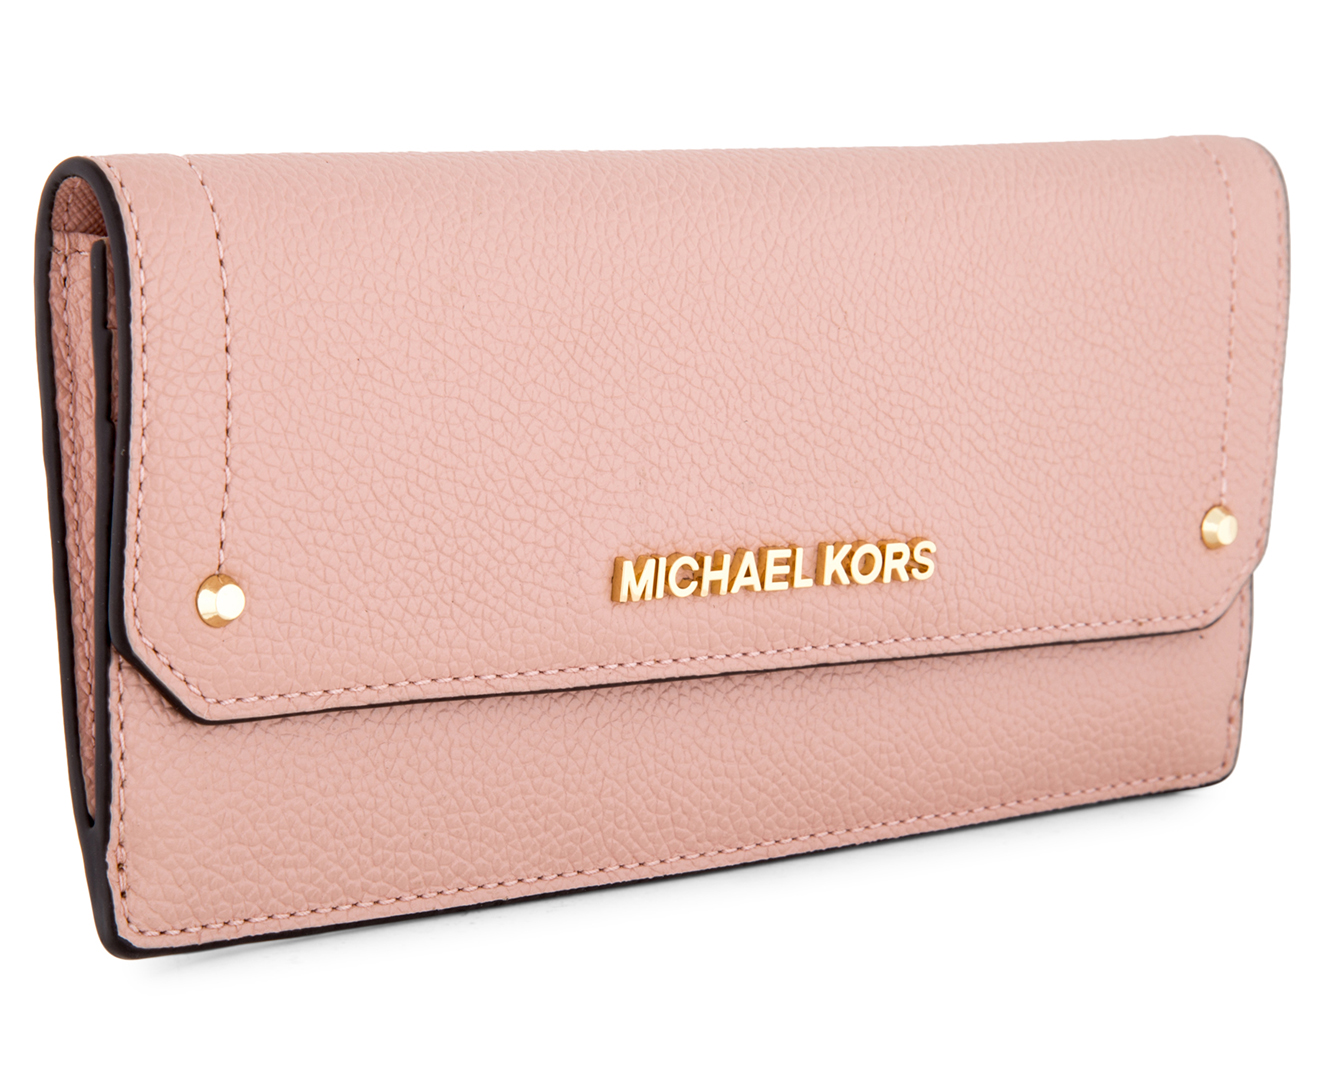 michael kors pastel pink wallet